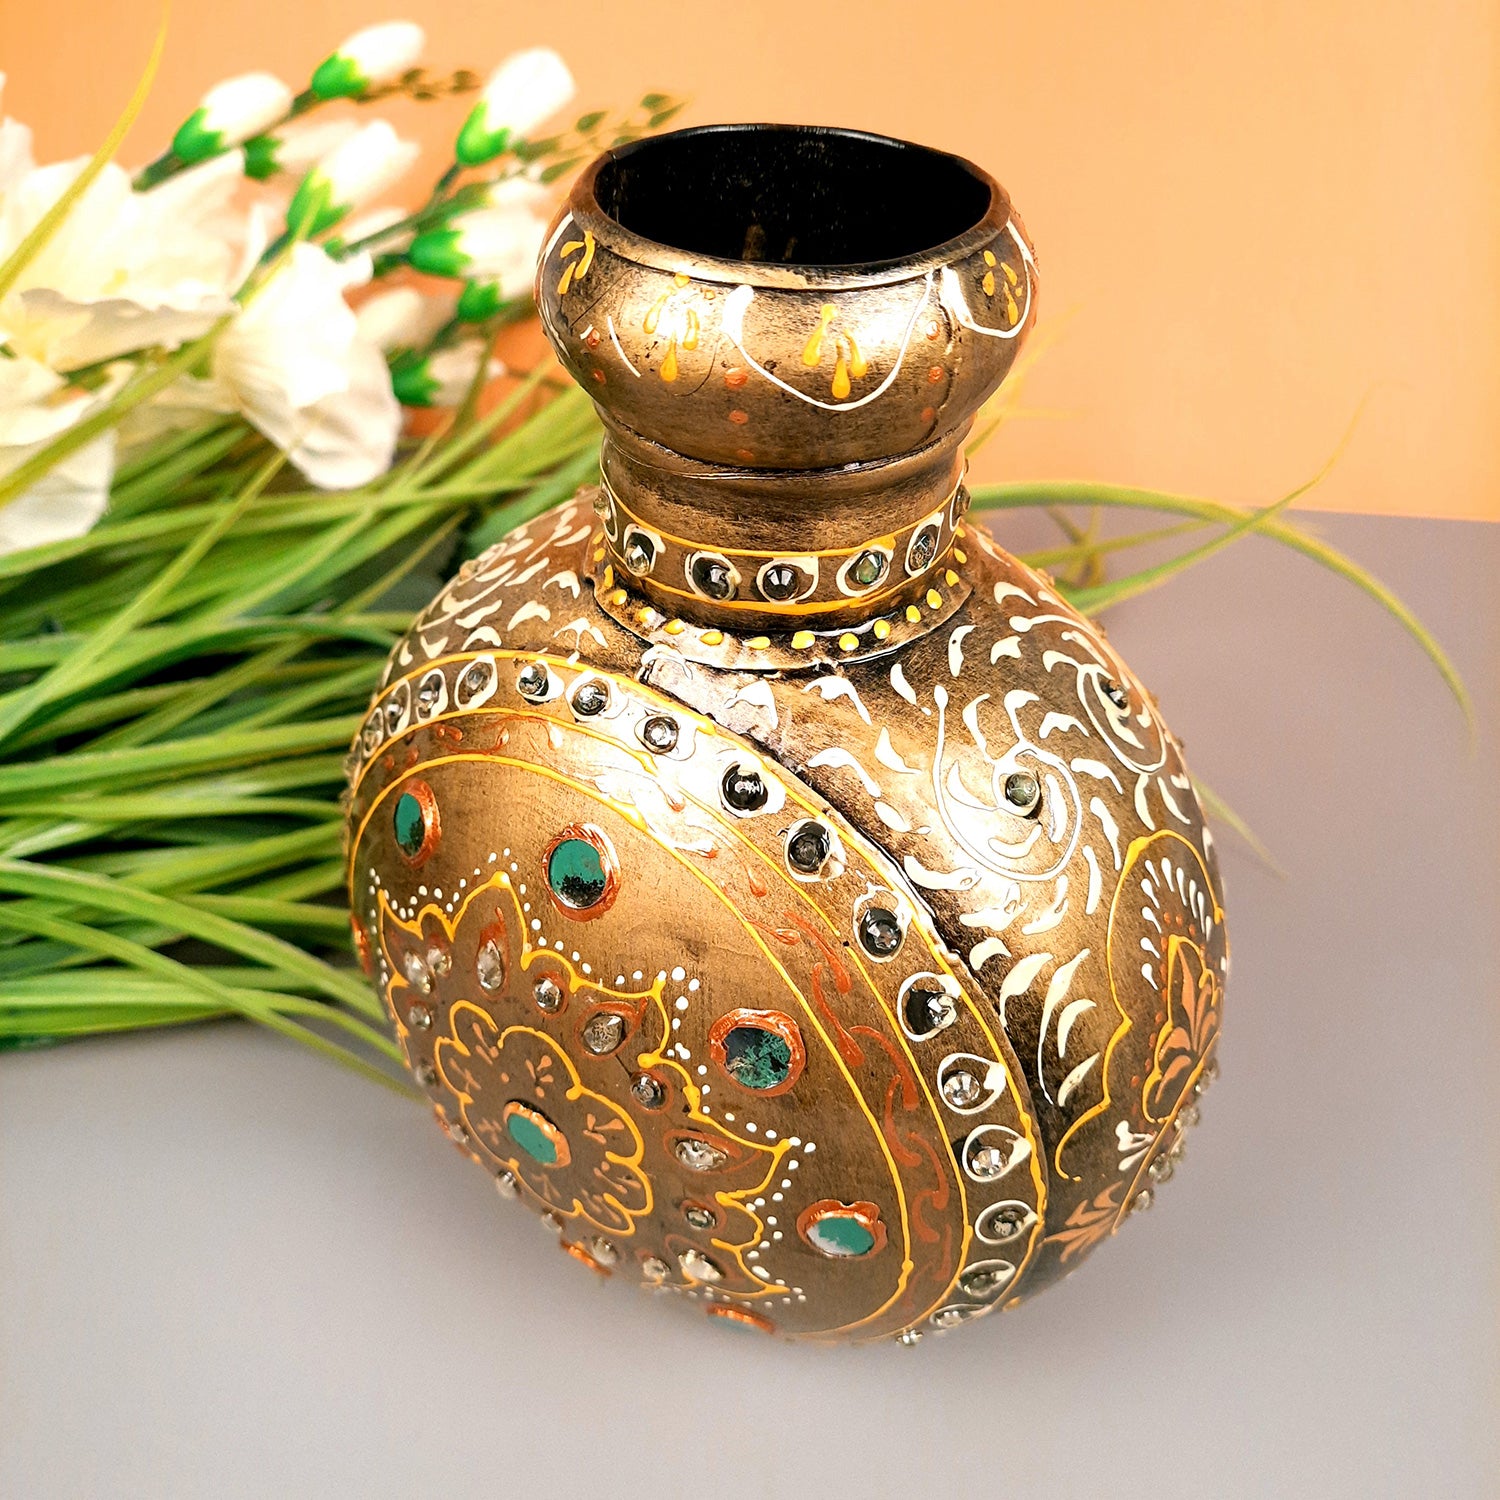 Flower Pot | Vase - Metal In Pitcher Design - for Home Decoration, Living Room, Table, Shelf, Office & Interior Decor | House Warming & Festival Gift   - 8 Inch